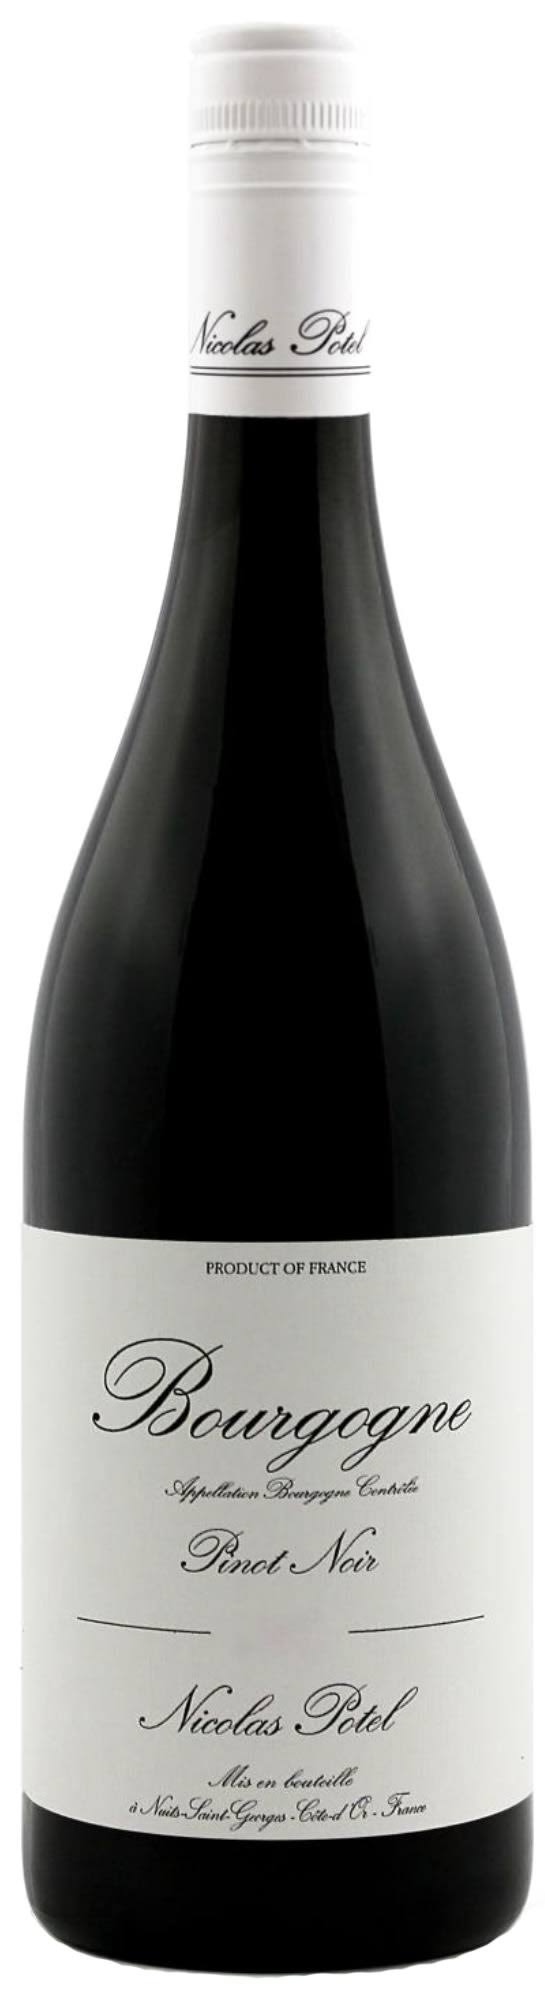 Nicolas Potel Bourgogne Pinot Noir - France